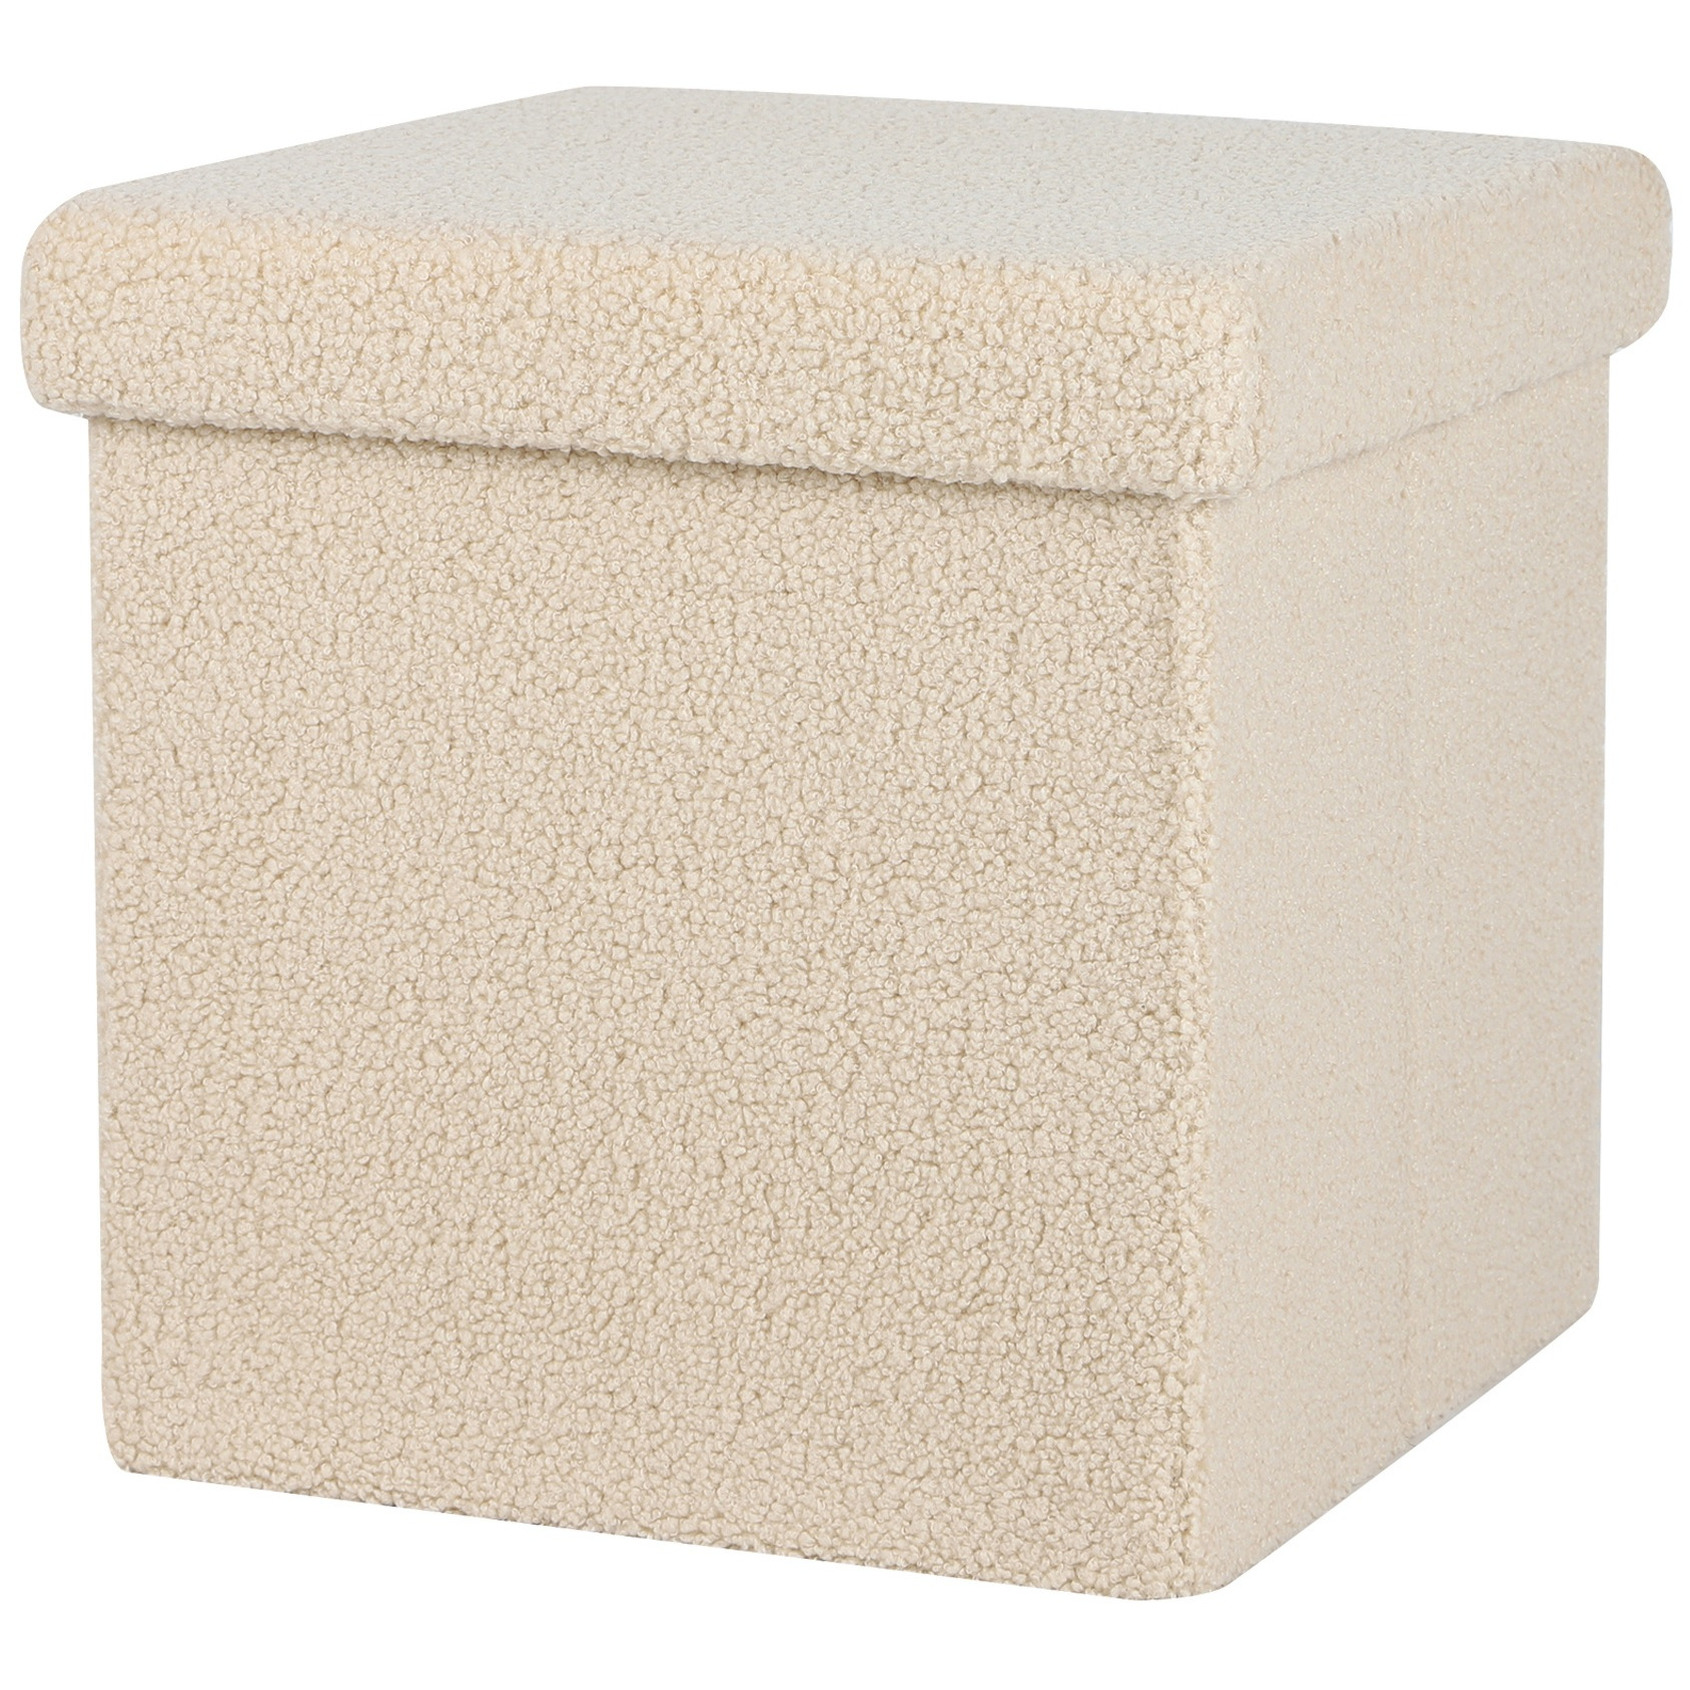 Poef Teddy BOX hocker opbergbox beige polyester-mdf 38 x 38 cm opvouwbaar